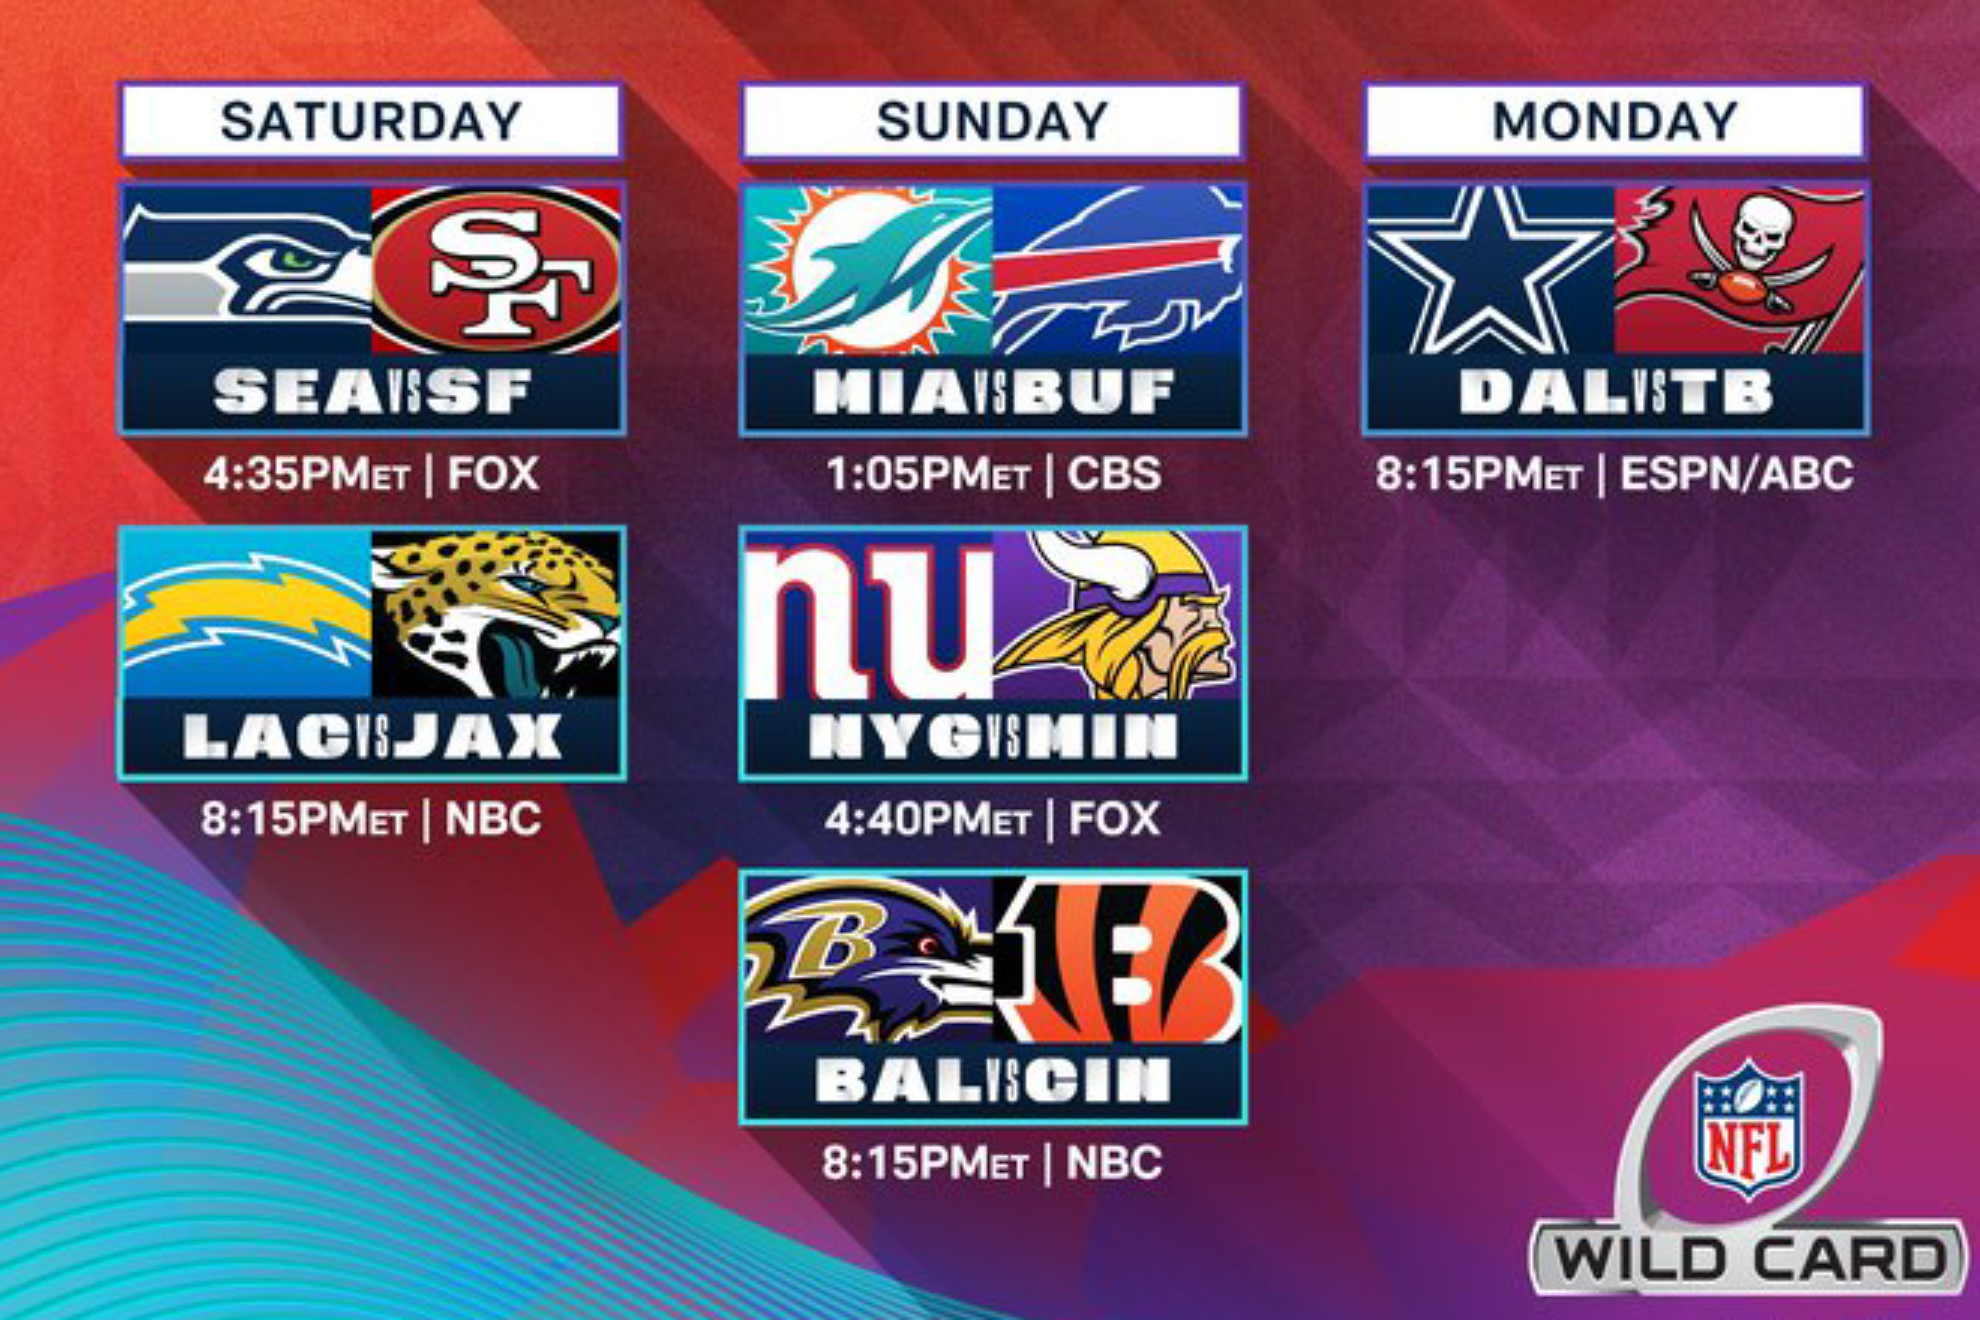 NFL Super Wild Card Weekend Schedule: Road to Super Bowl LVII is set